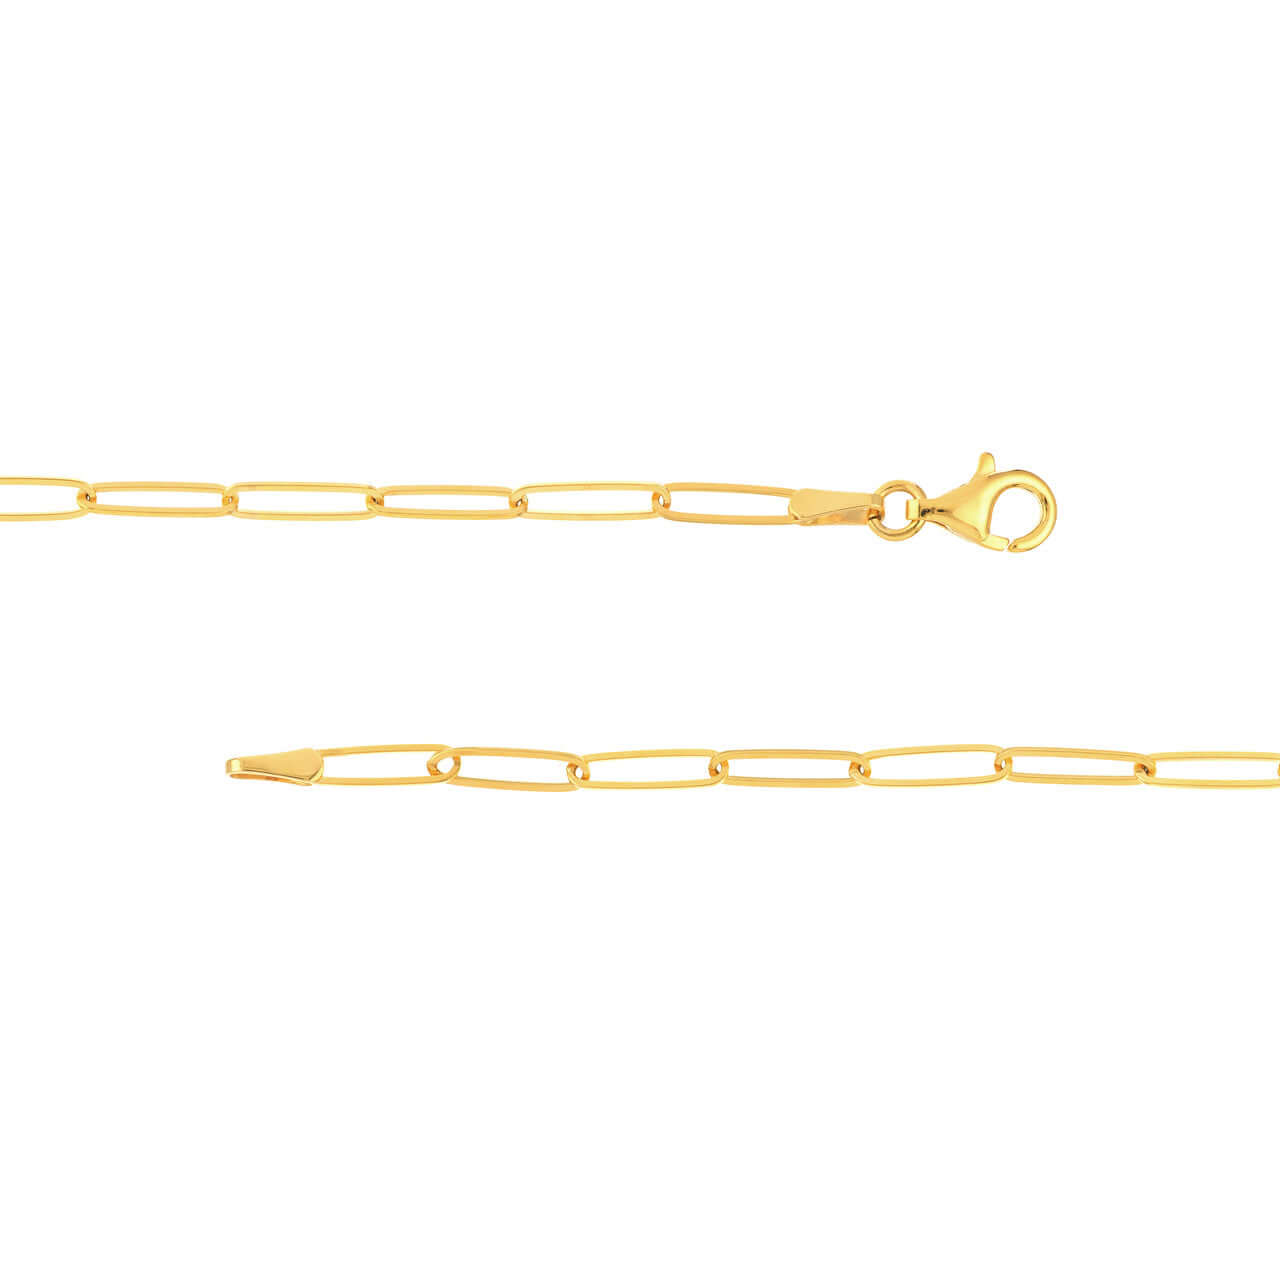 Gold Whisper Thin Paper Clip Chain | Lisa Robin | Lisa Robin#color_14K-yellow-gold